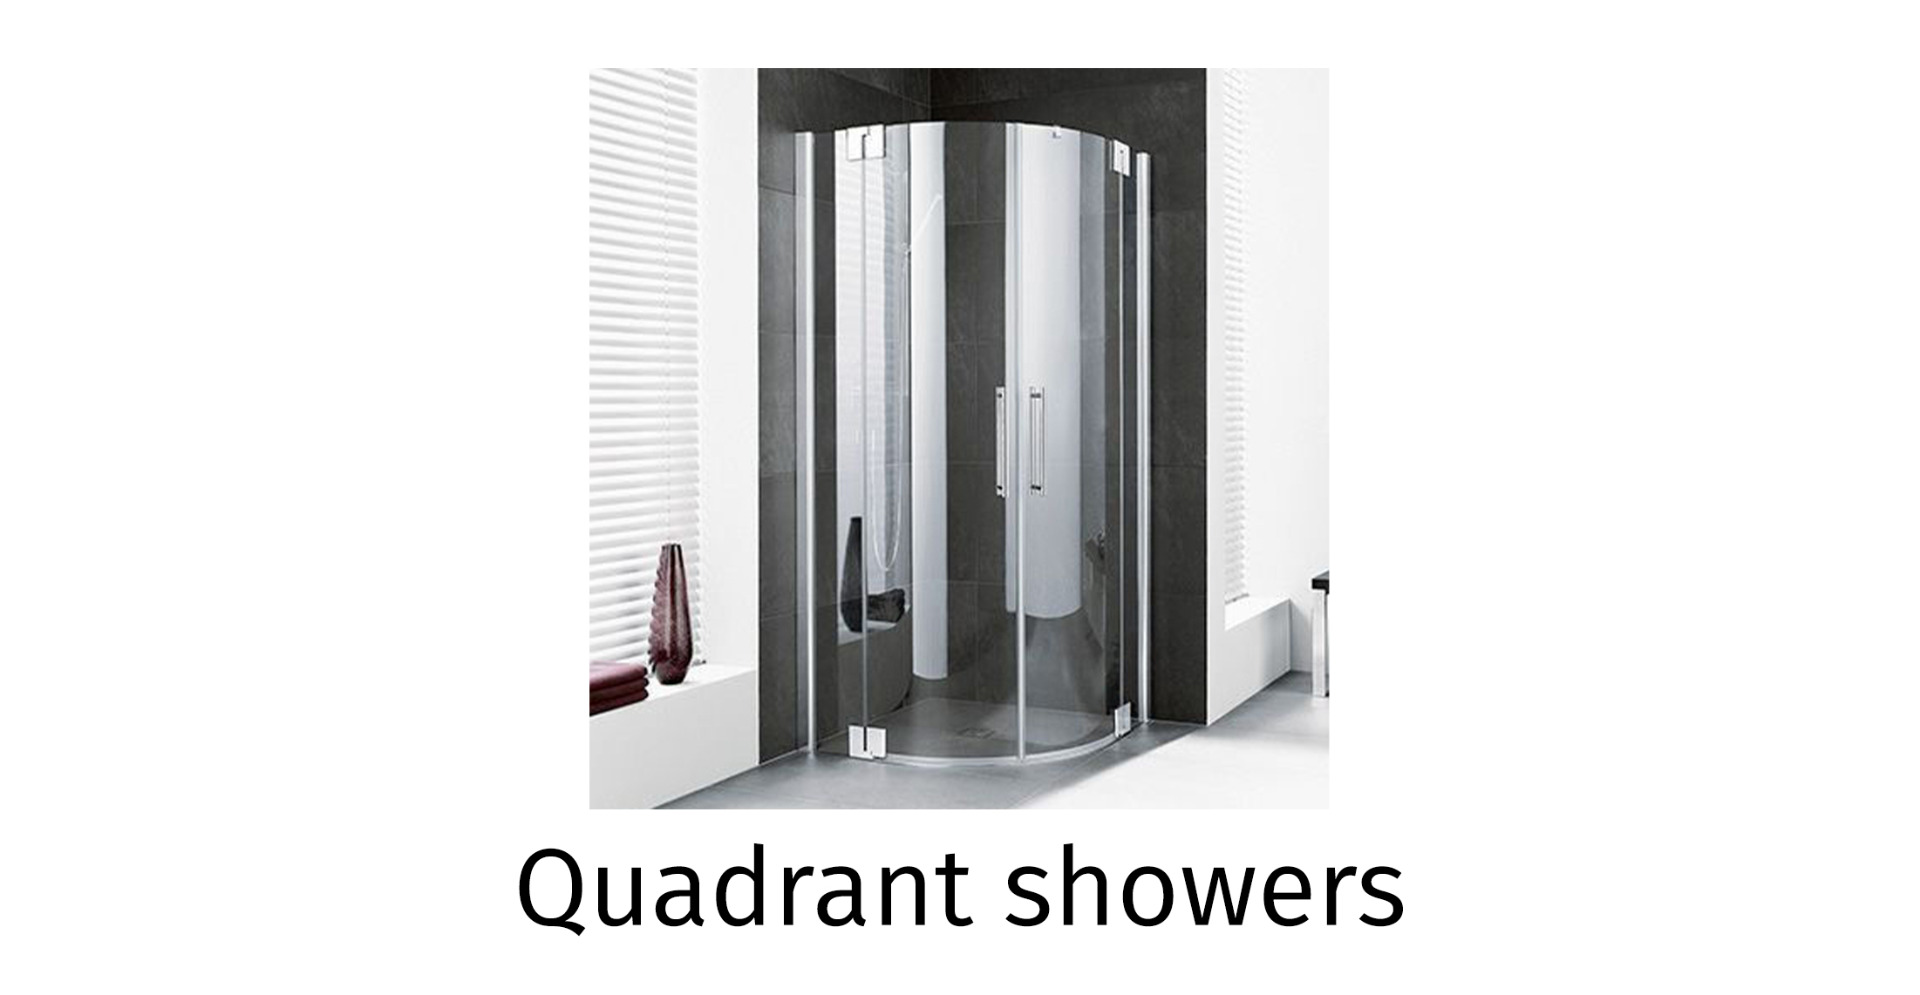 Quadrant showers